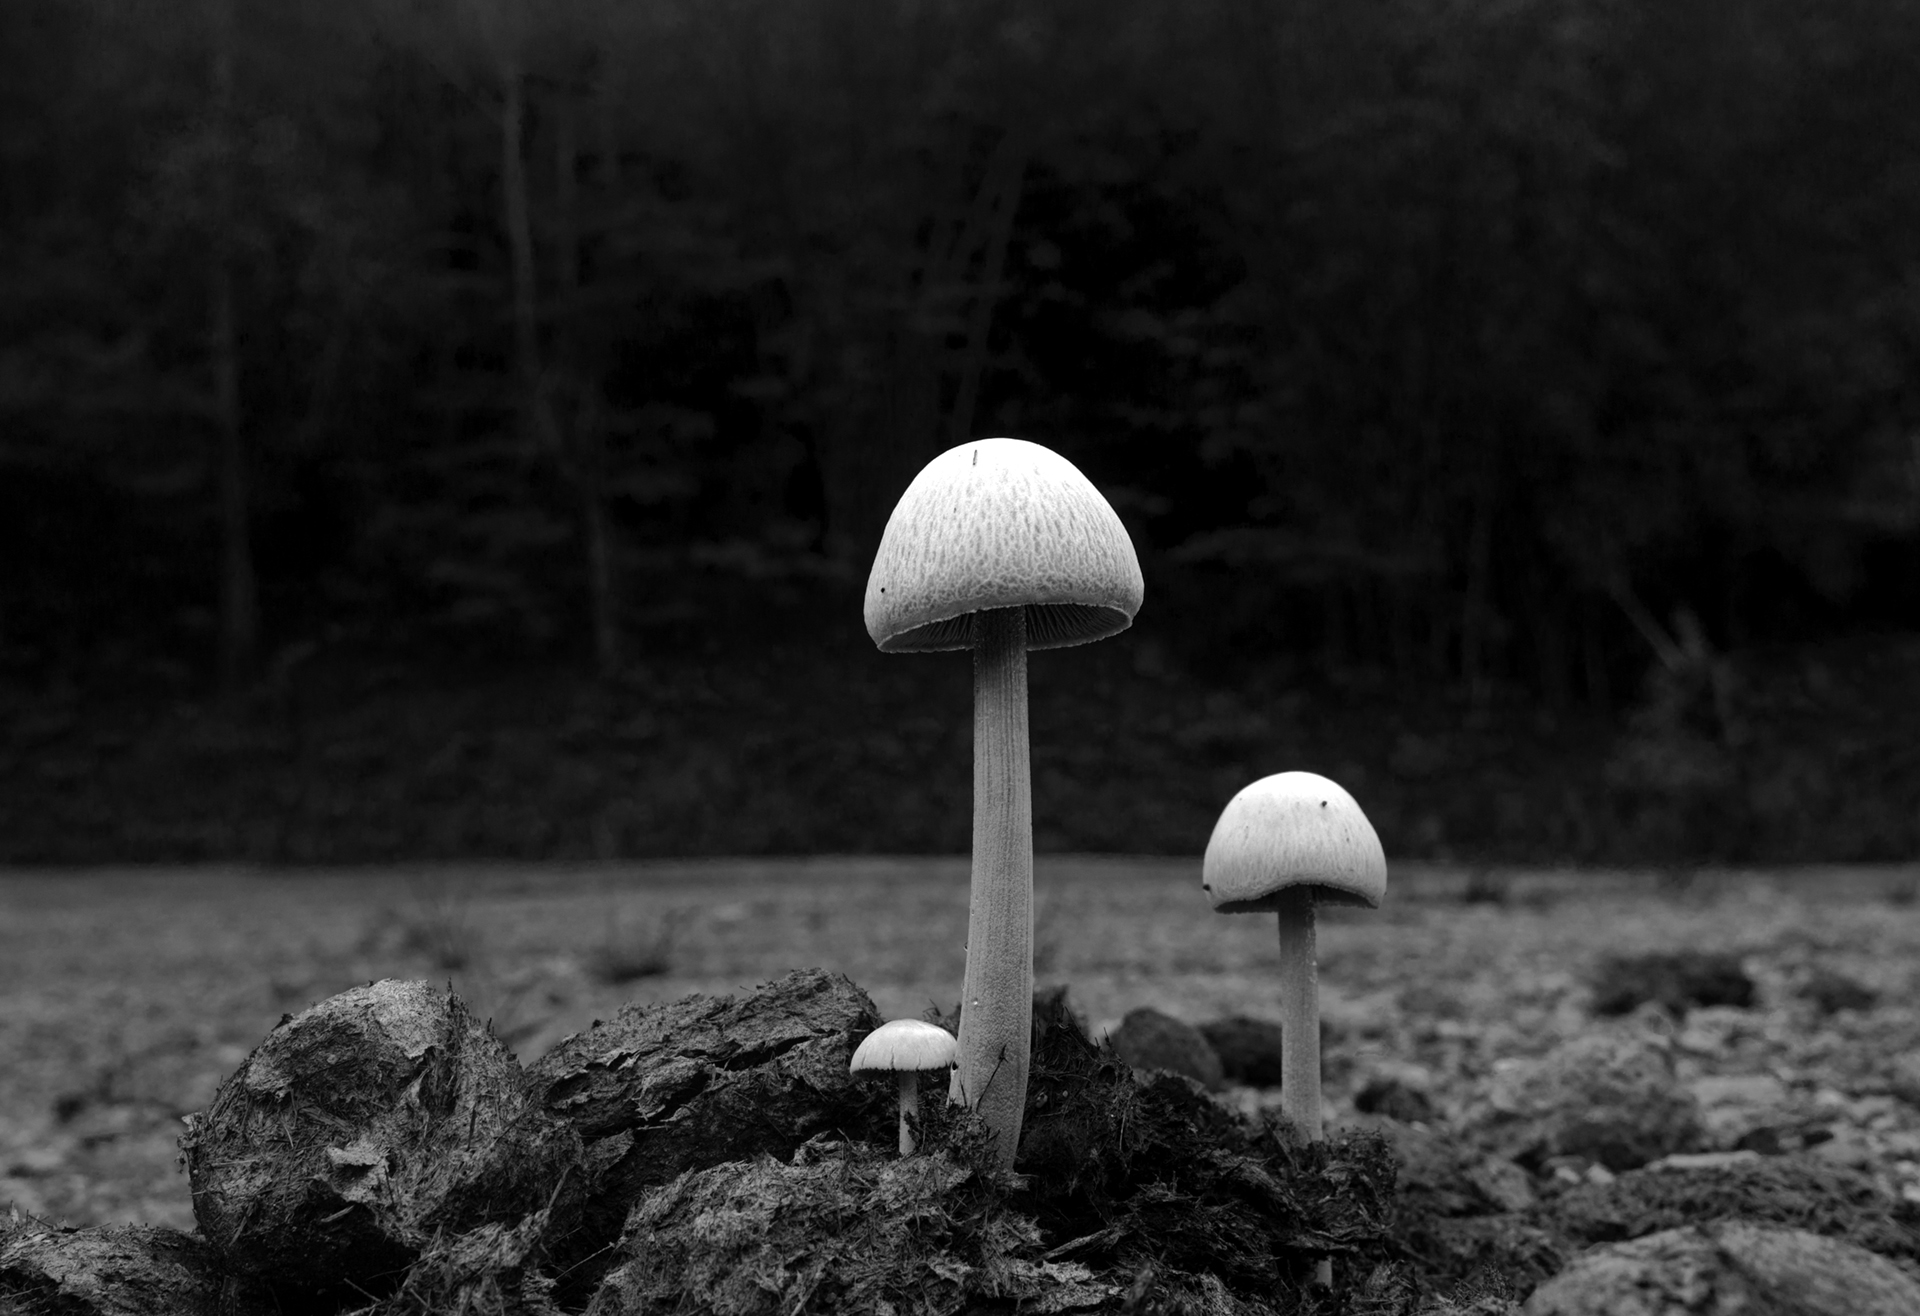 Mushrooms by Jose Luis Rodriguez